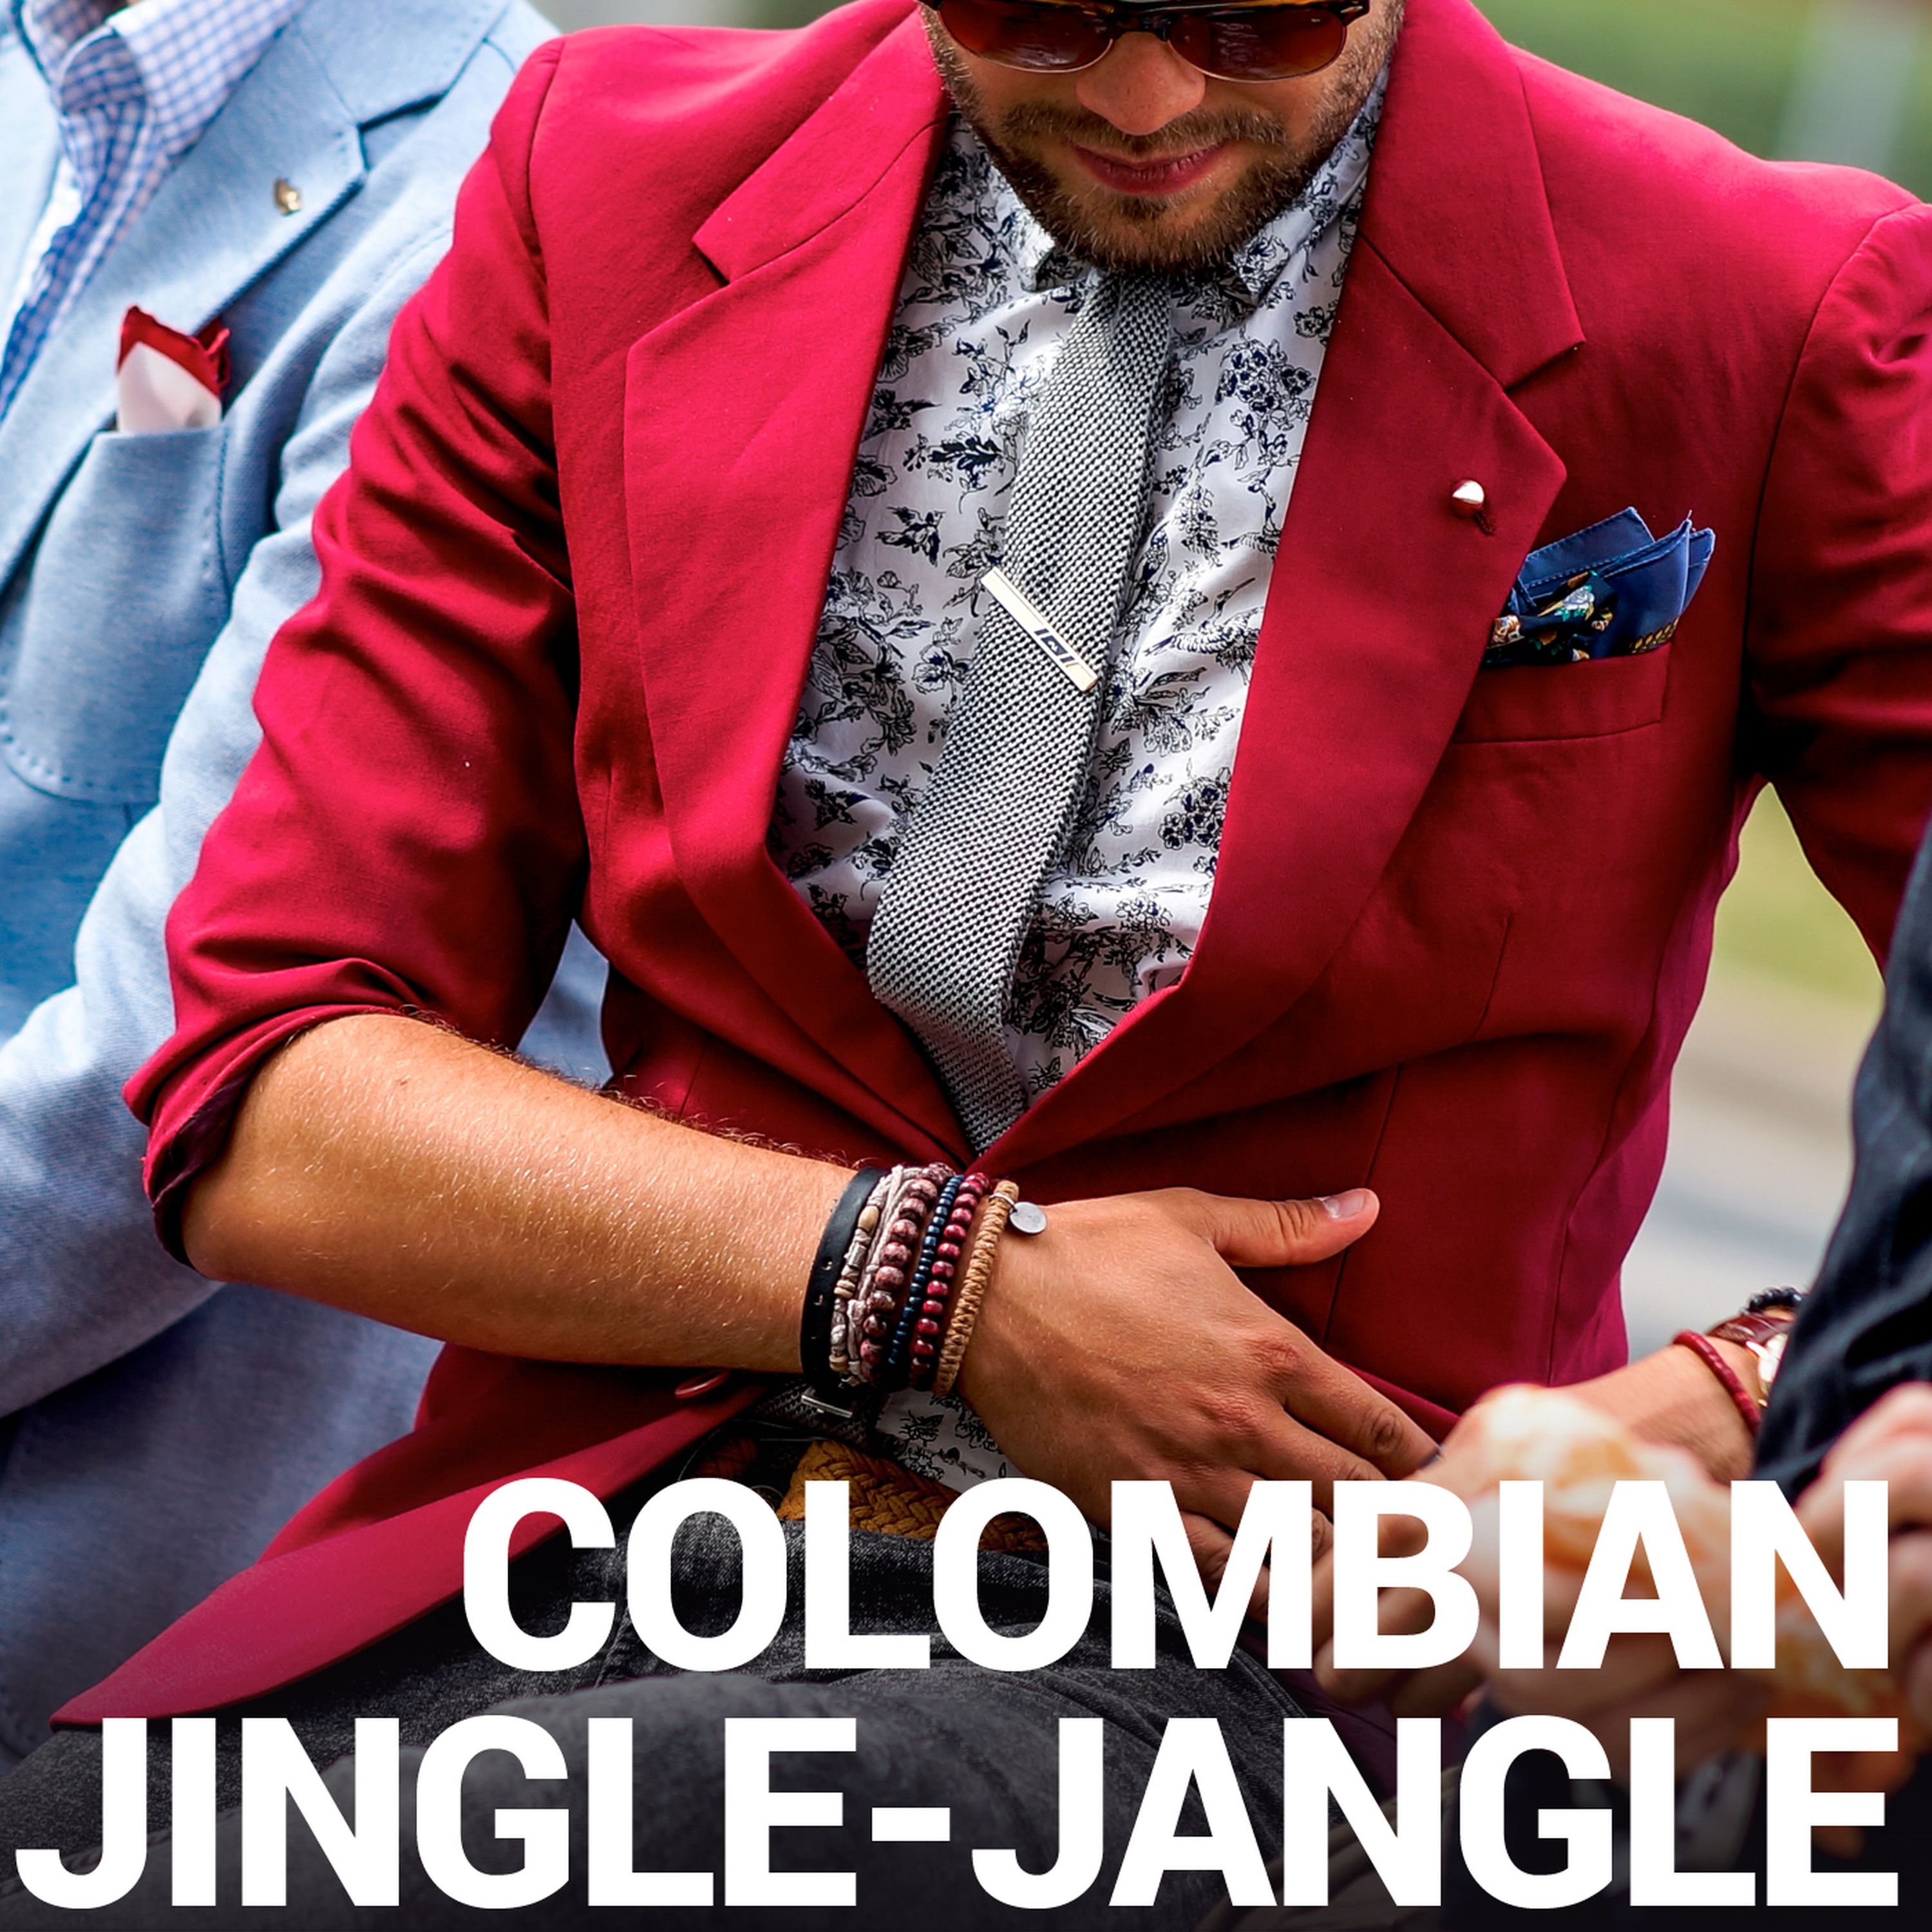 Colombian Jingle-Jangle